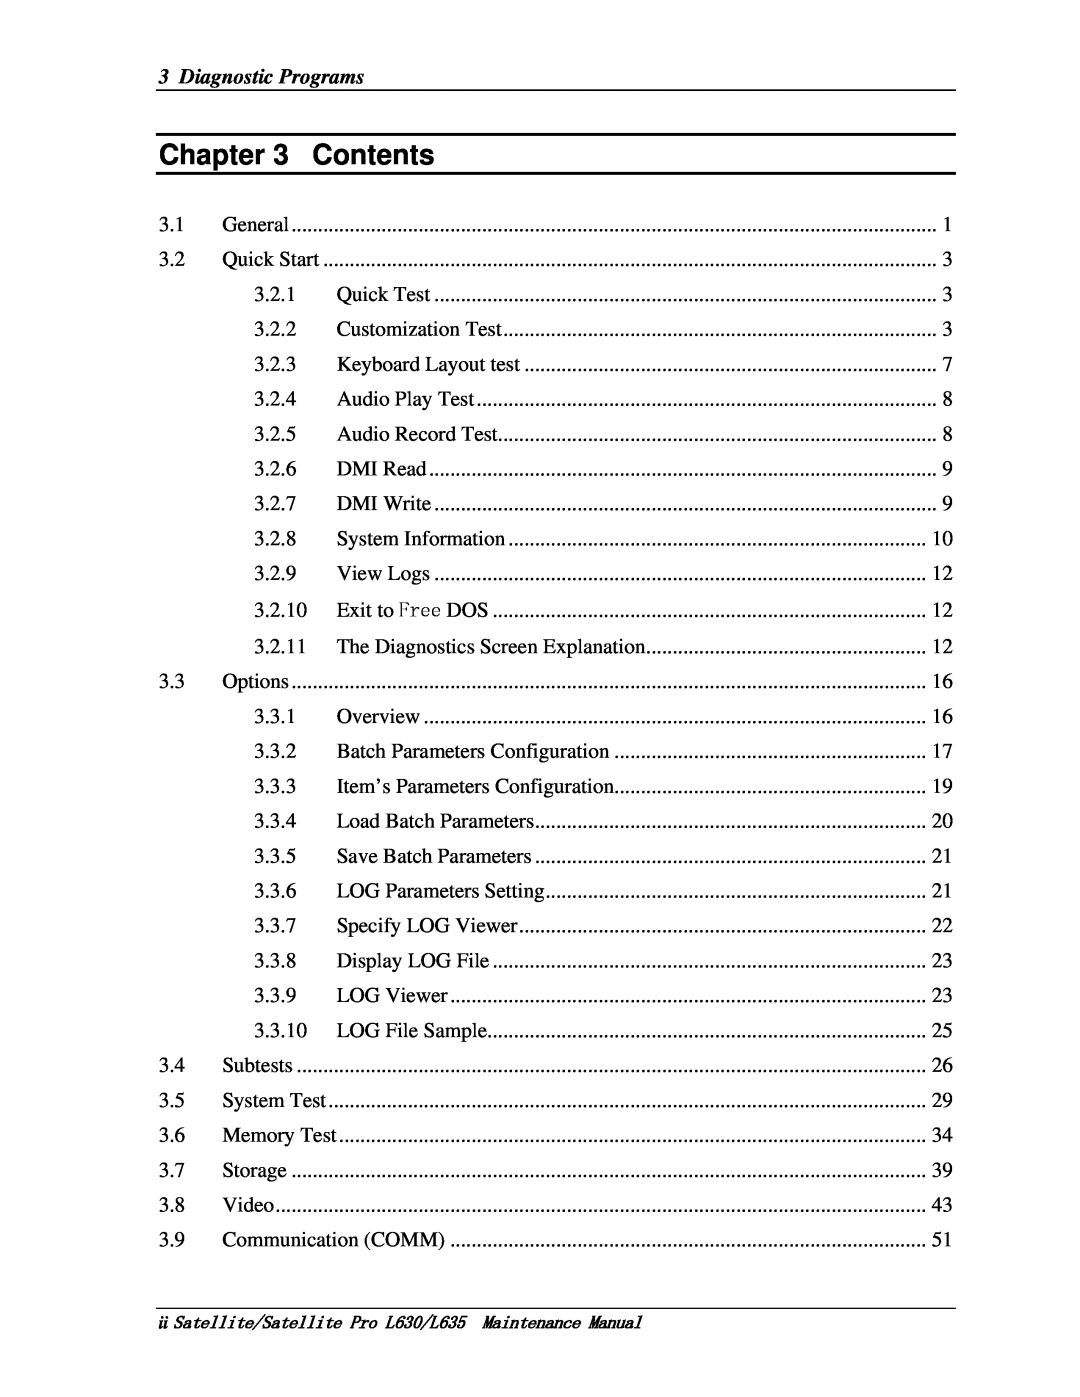 Toshiba manual Chapter, Contents, Diagnostic Programs, ii Satellite/Satellite Pro L630/L635 Maintenance Manual 